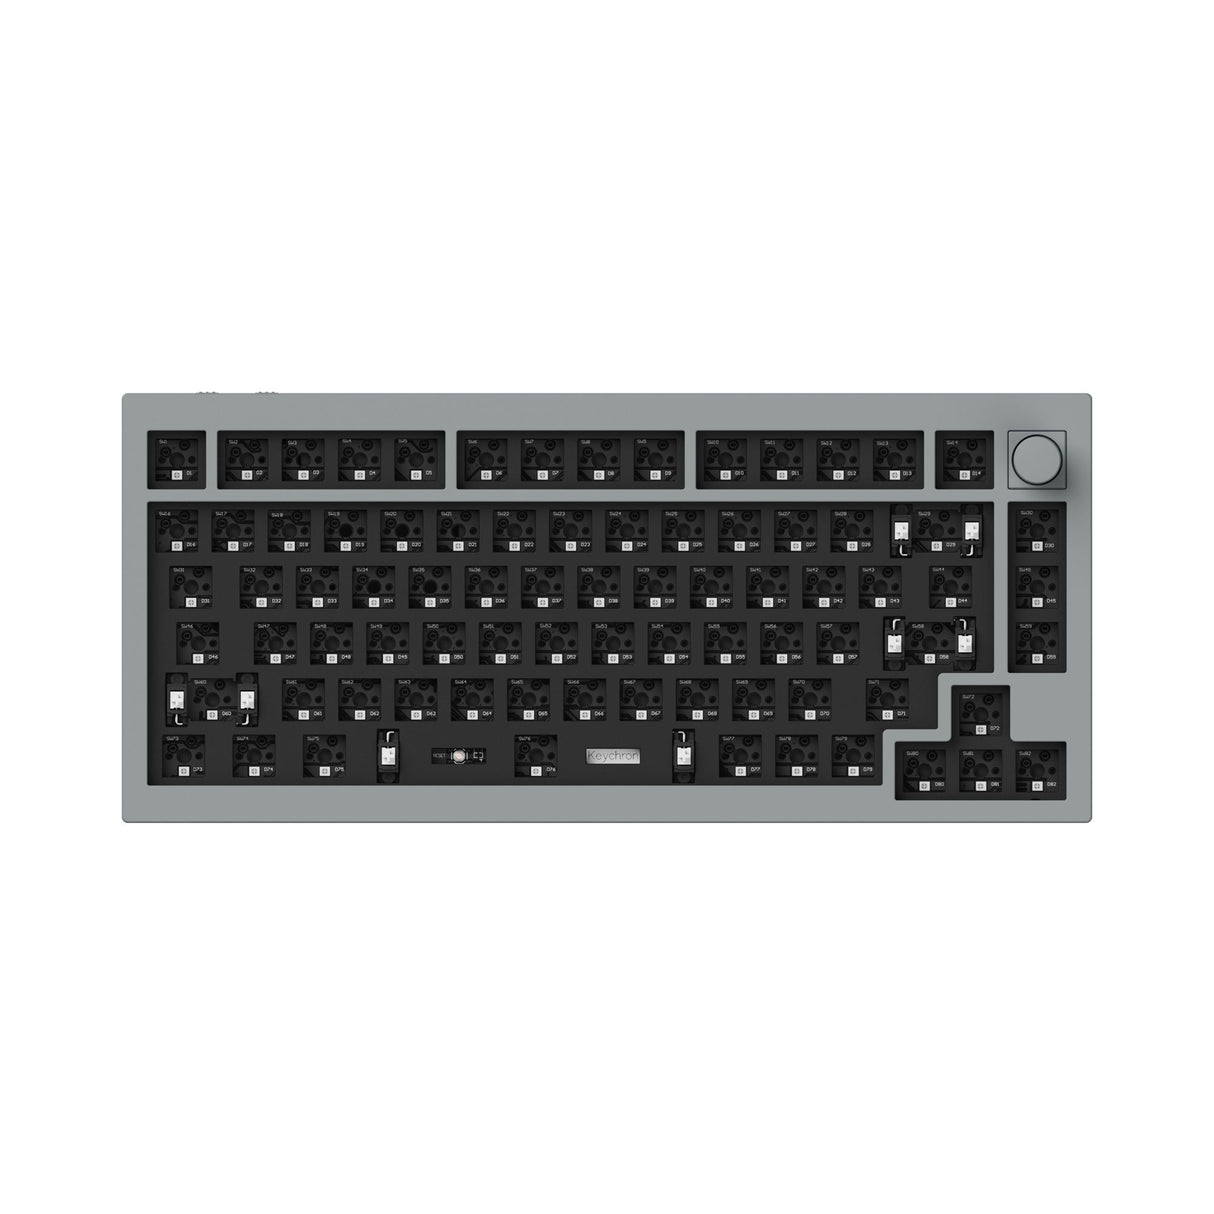 Keychron Q1 Pro QMK/VIA wireless custom mechanical keyboard knob 75% layout full aluminum grey frame for Mac Windows Linux barebone